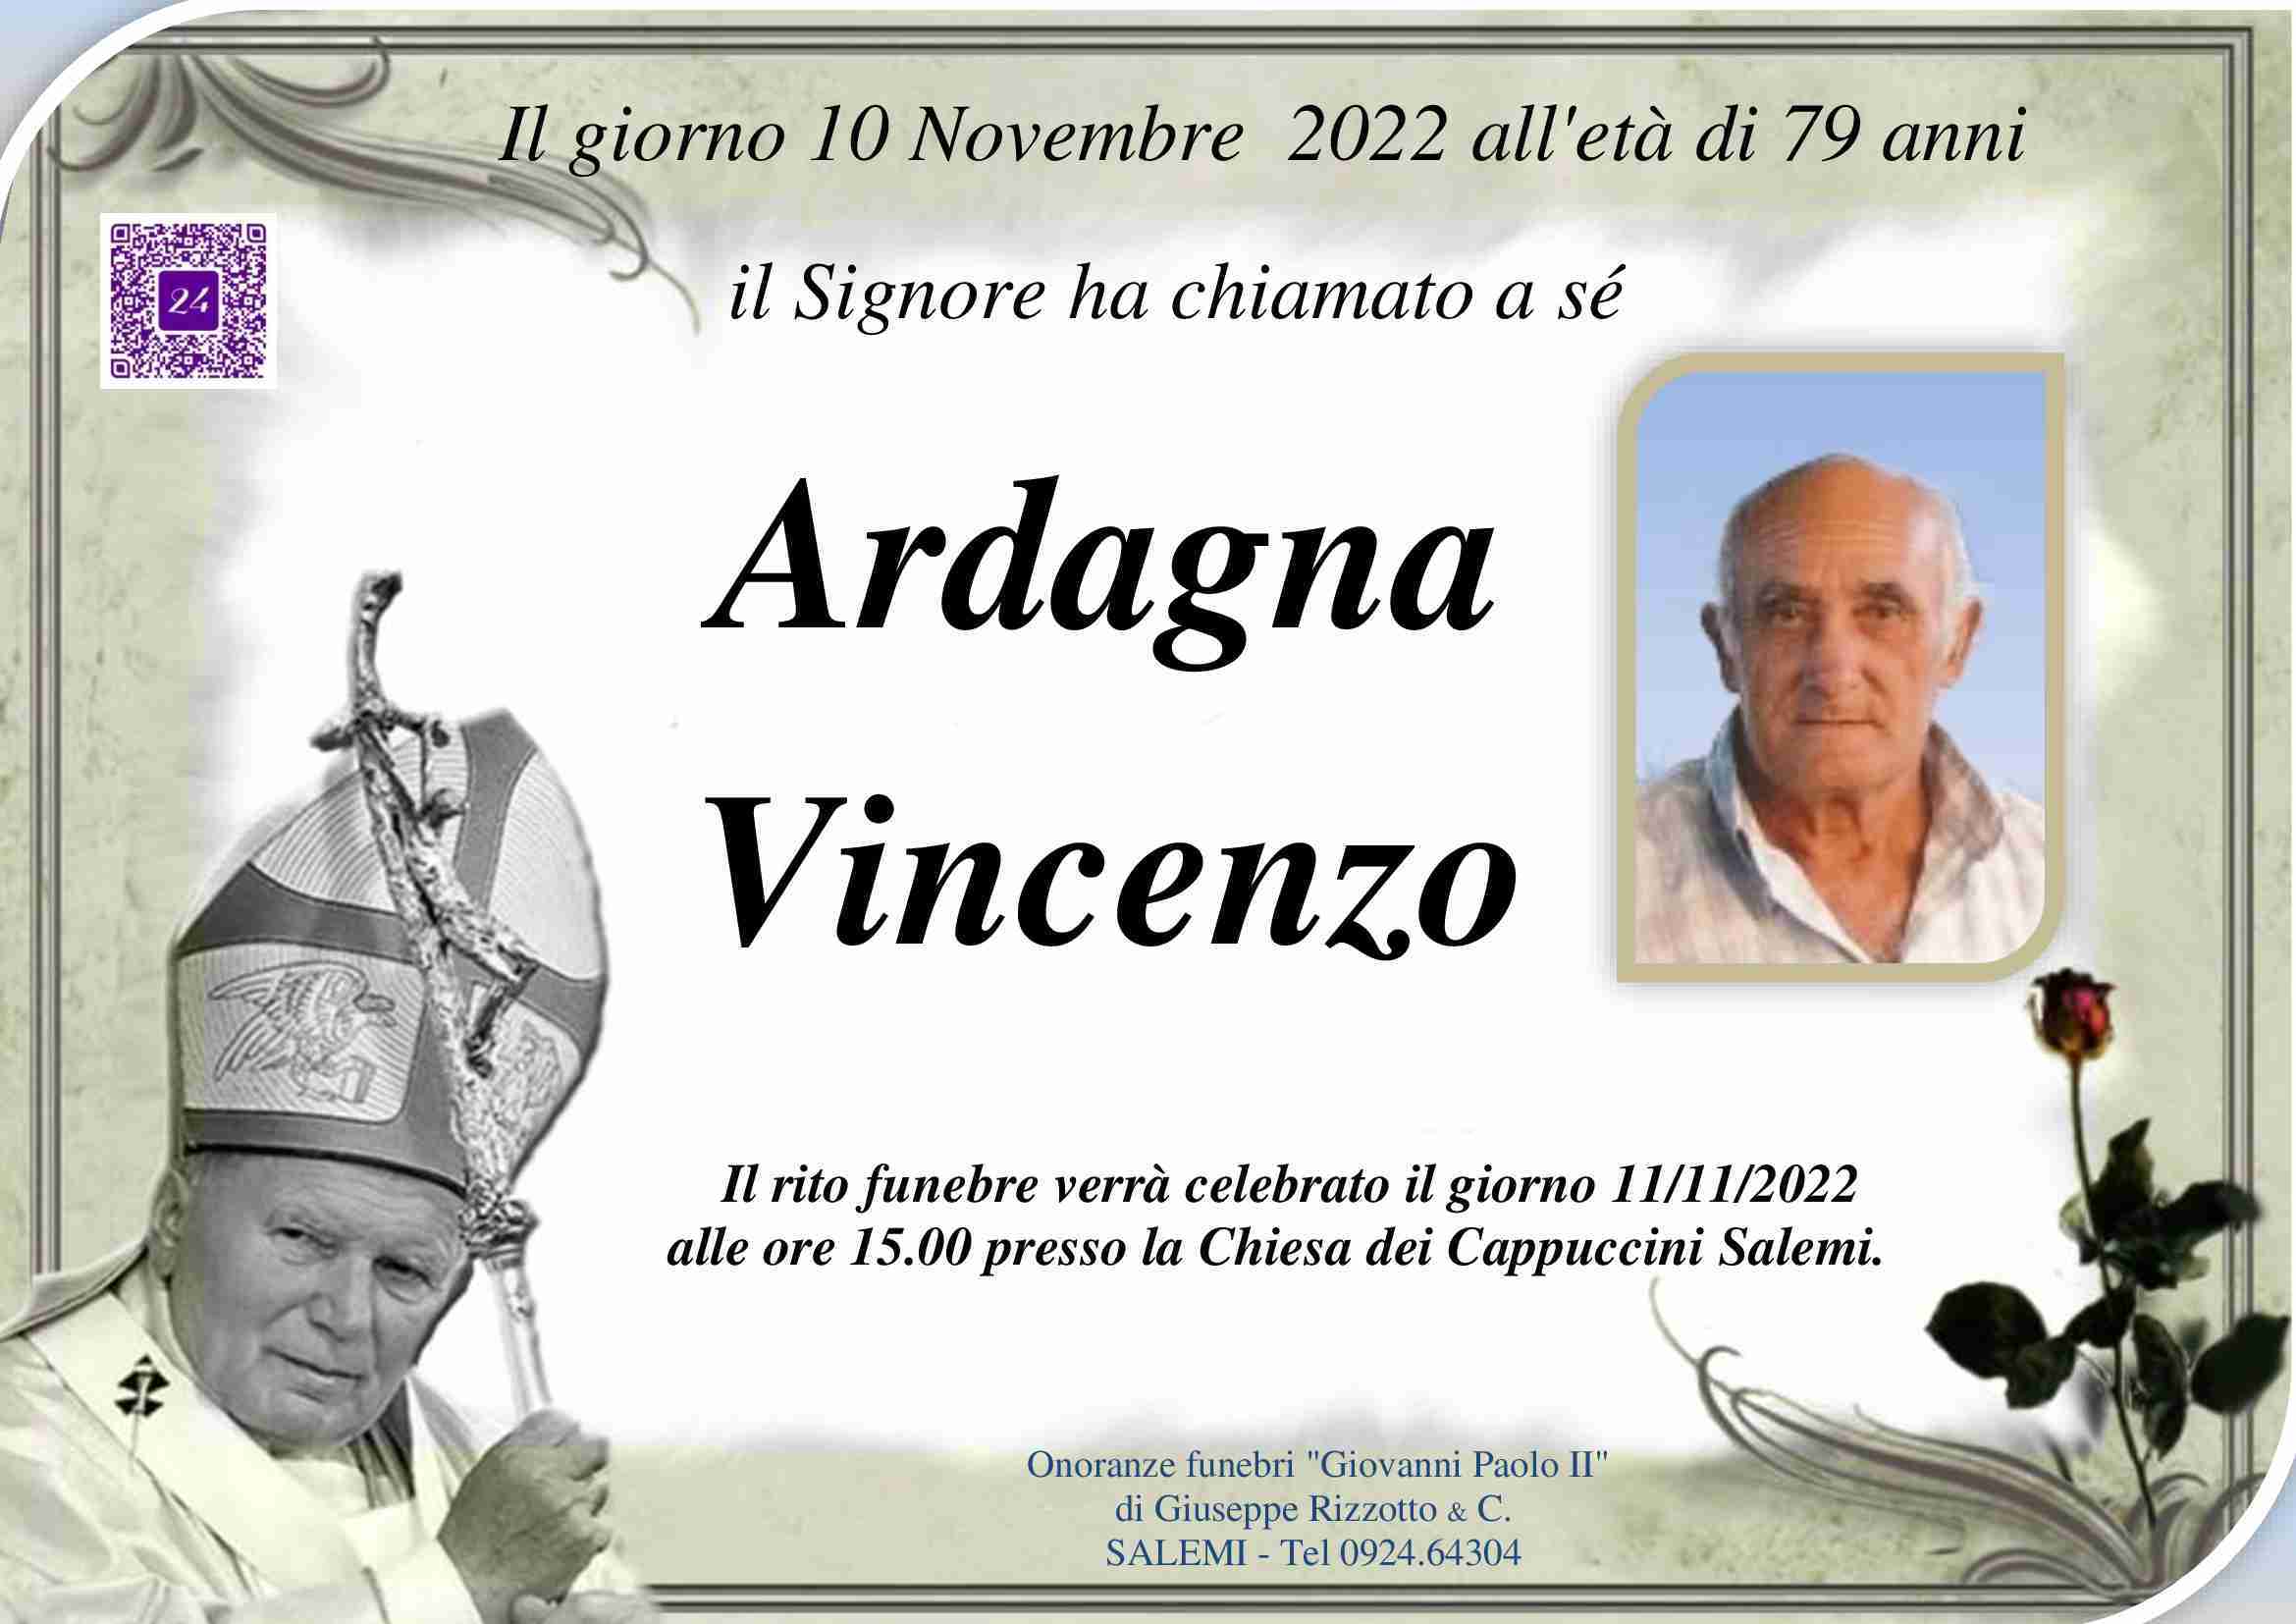 Vincenzo Ardagna